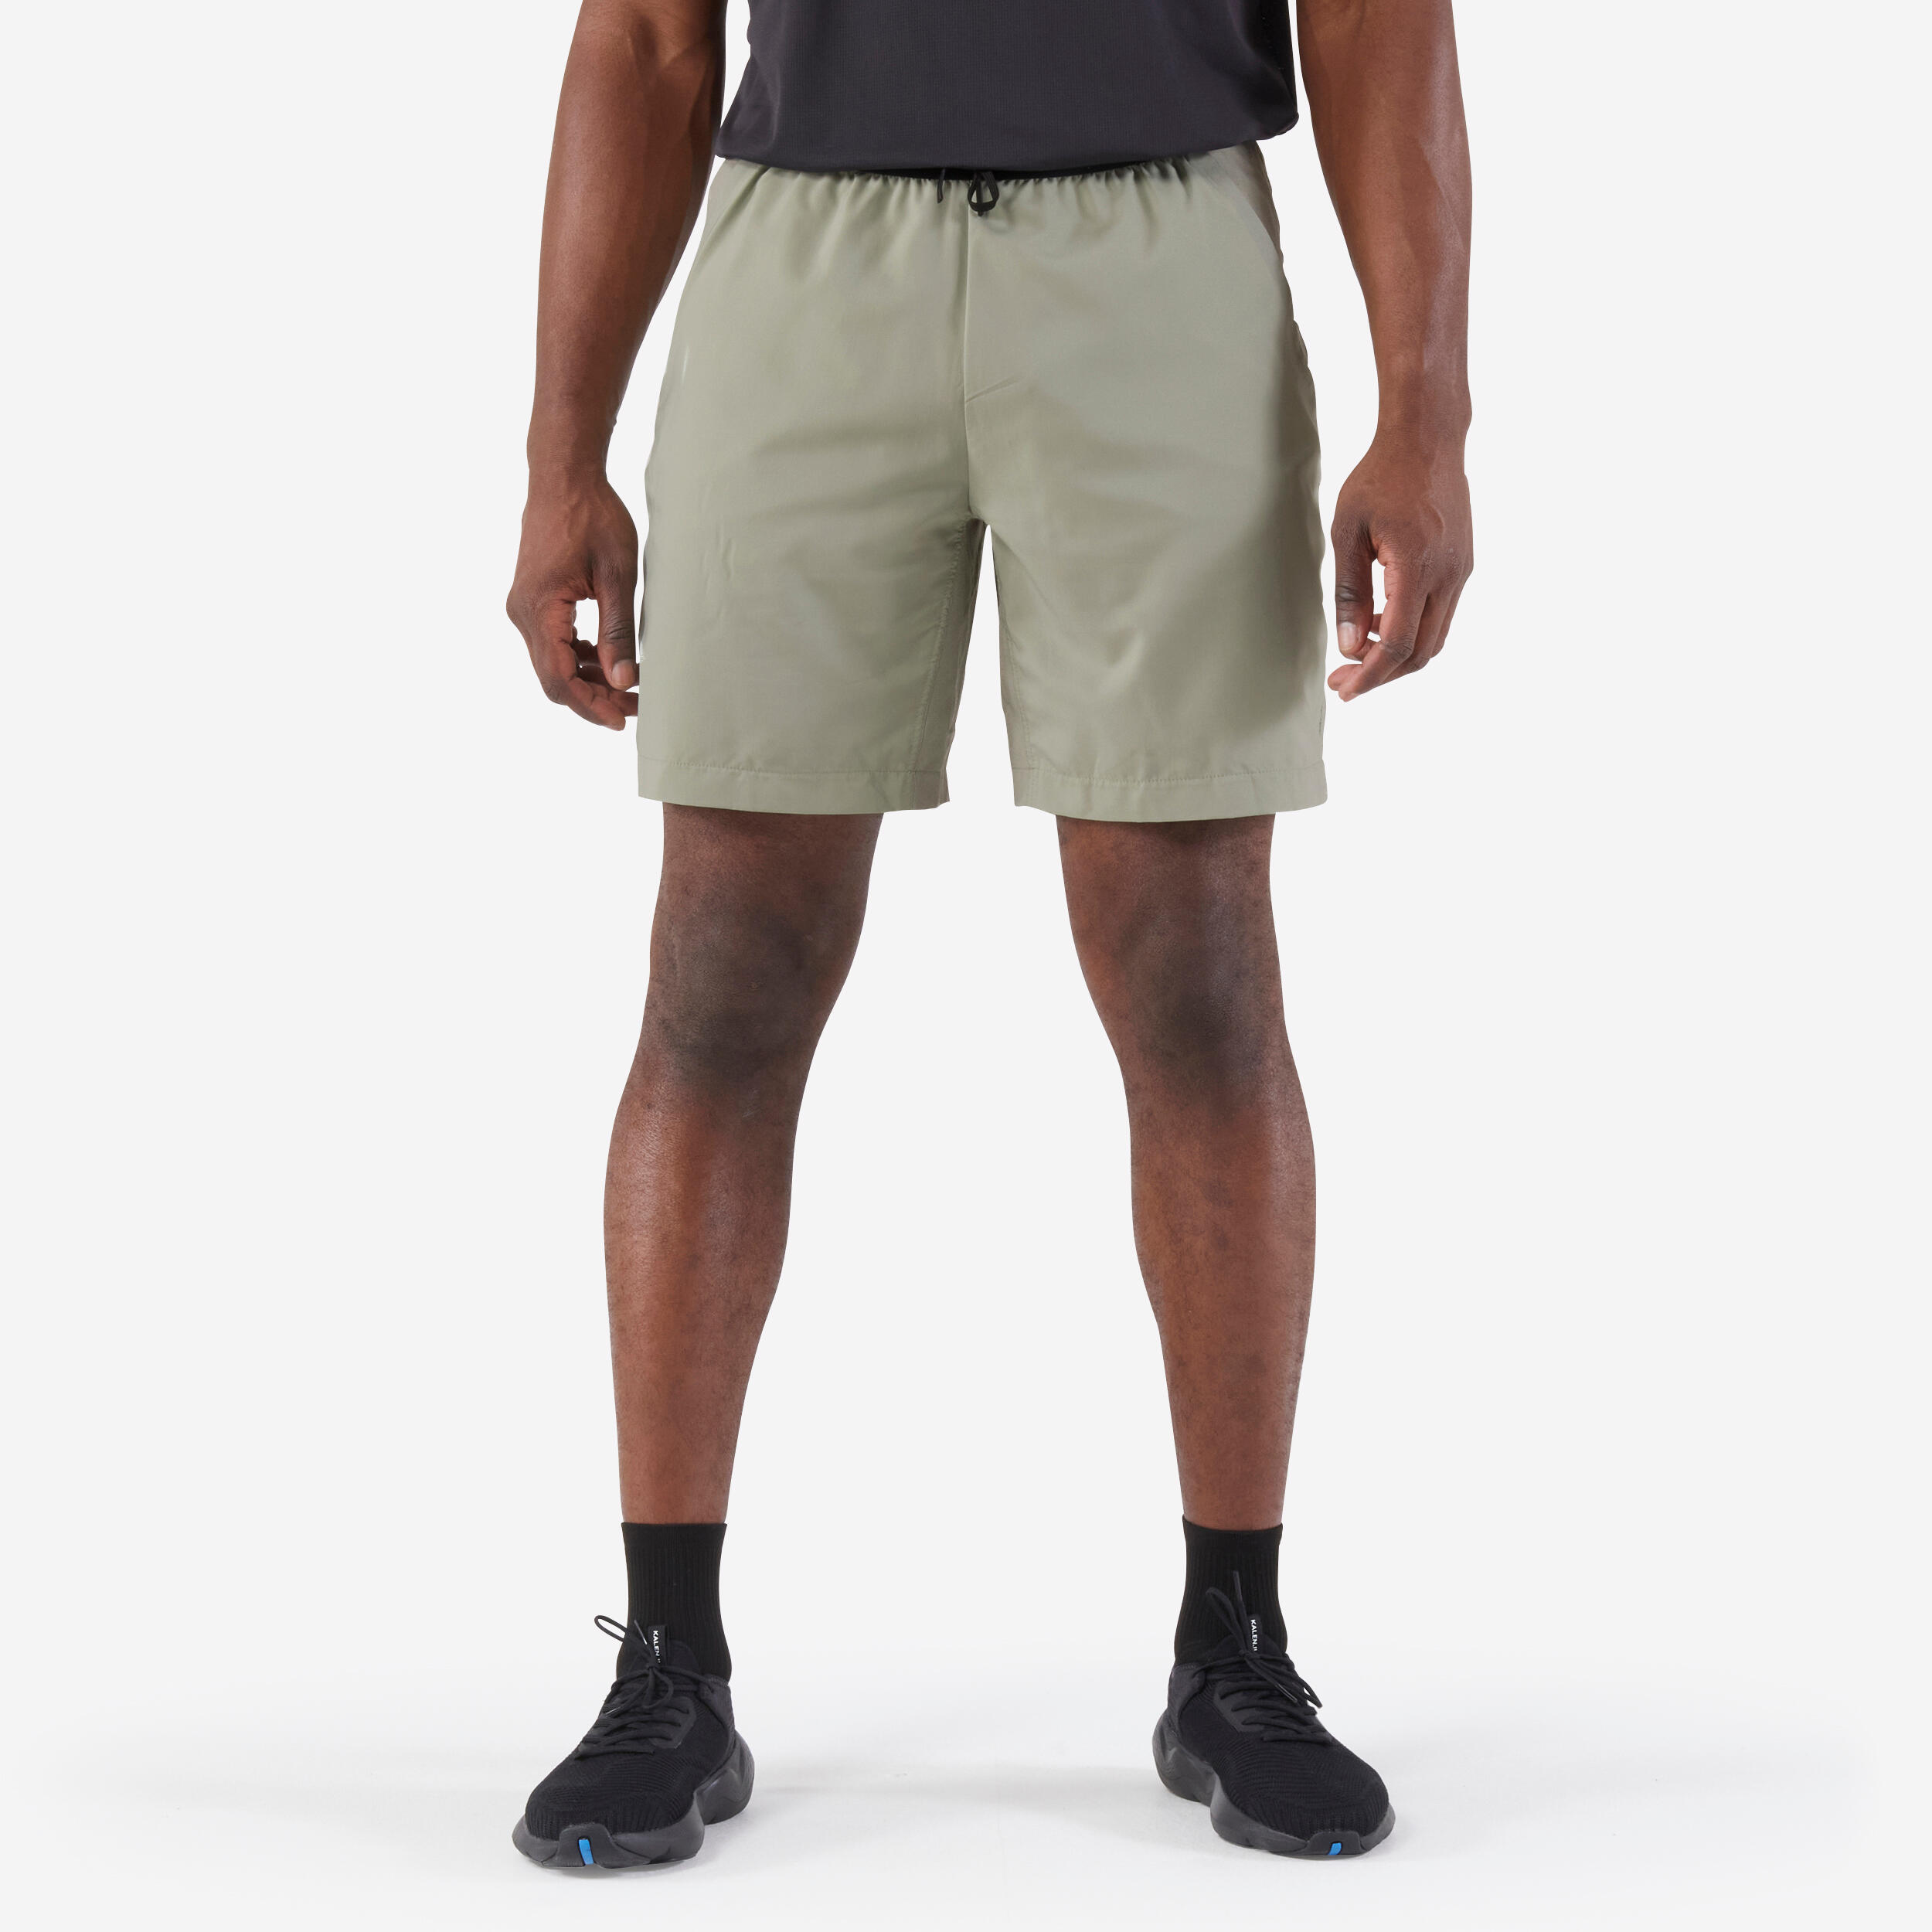 Men's Running Breathable Dry+ Shorts - Grey